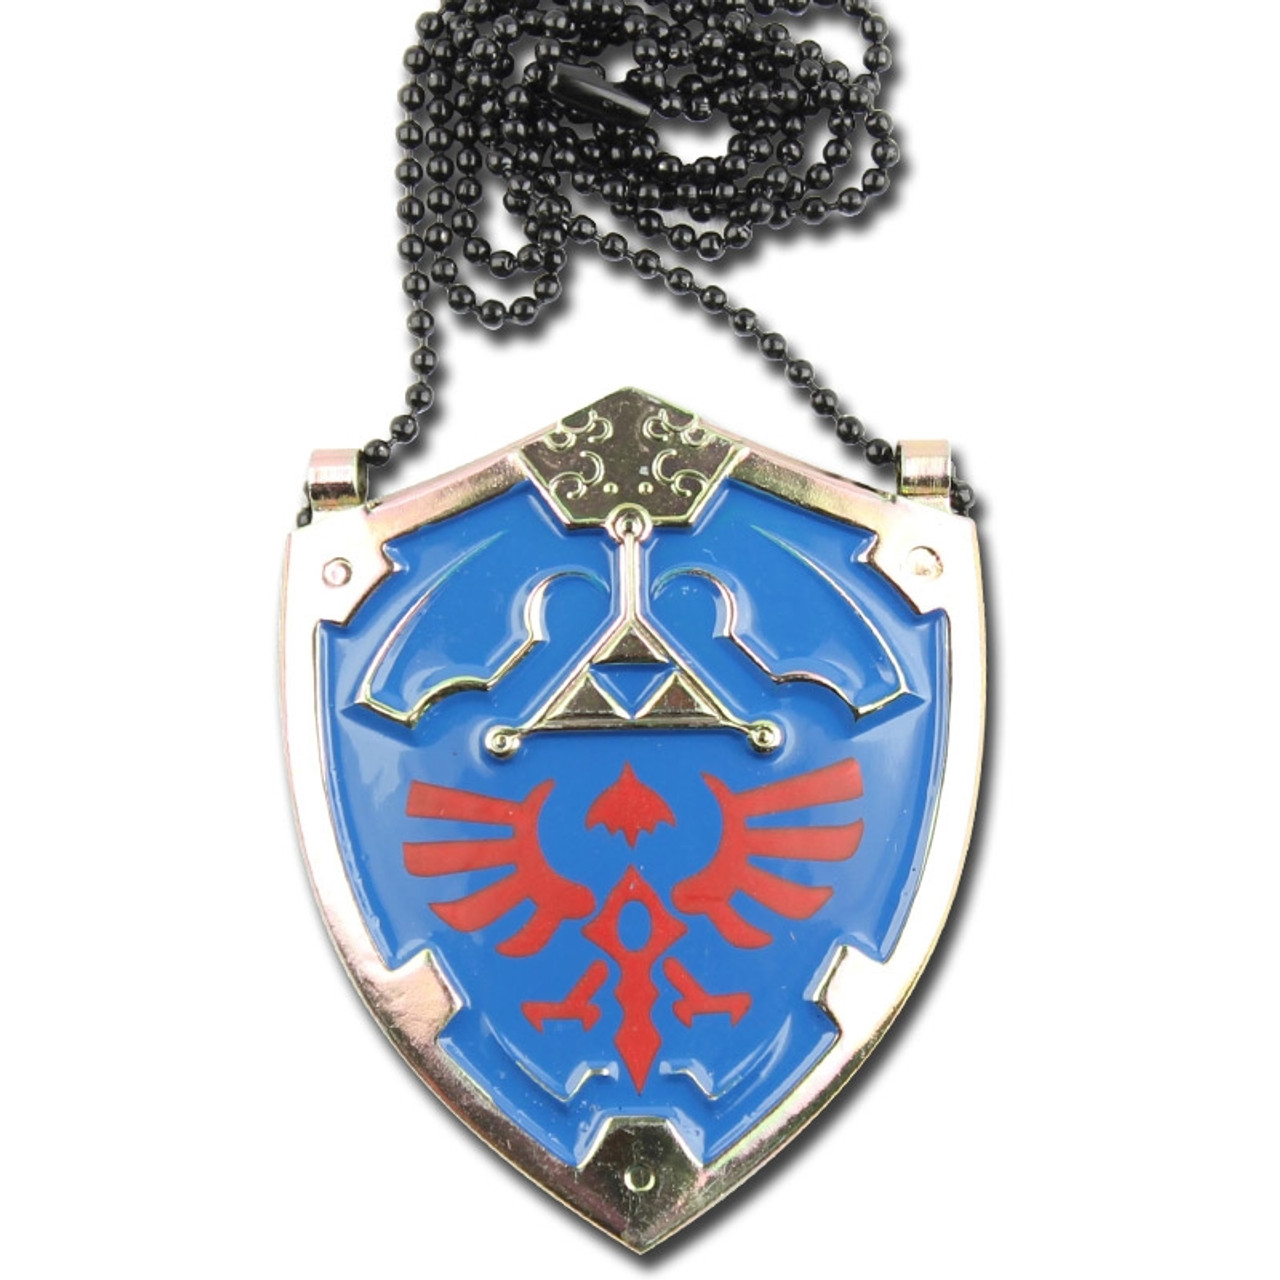 Zelda Link's Hylian Shield Necklaces Stainless Steel Pendant